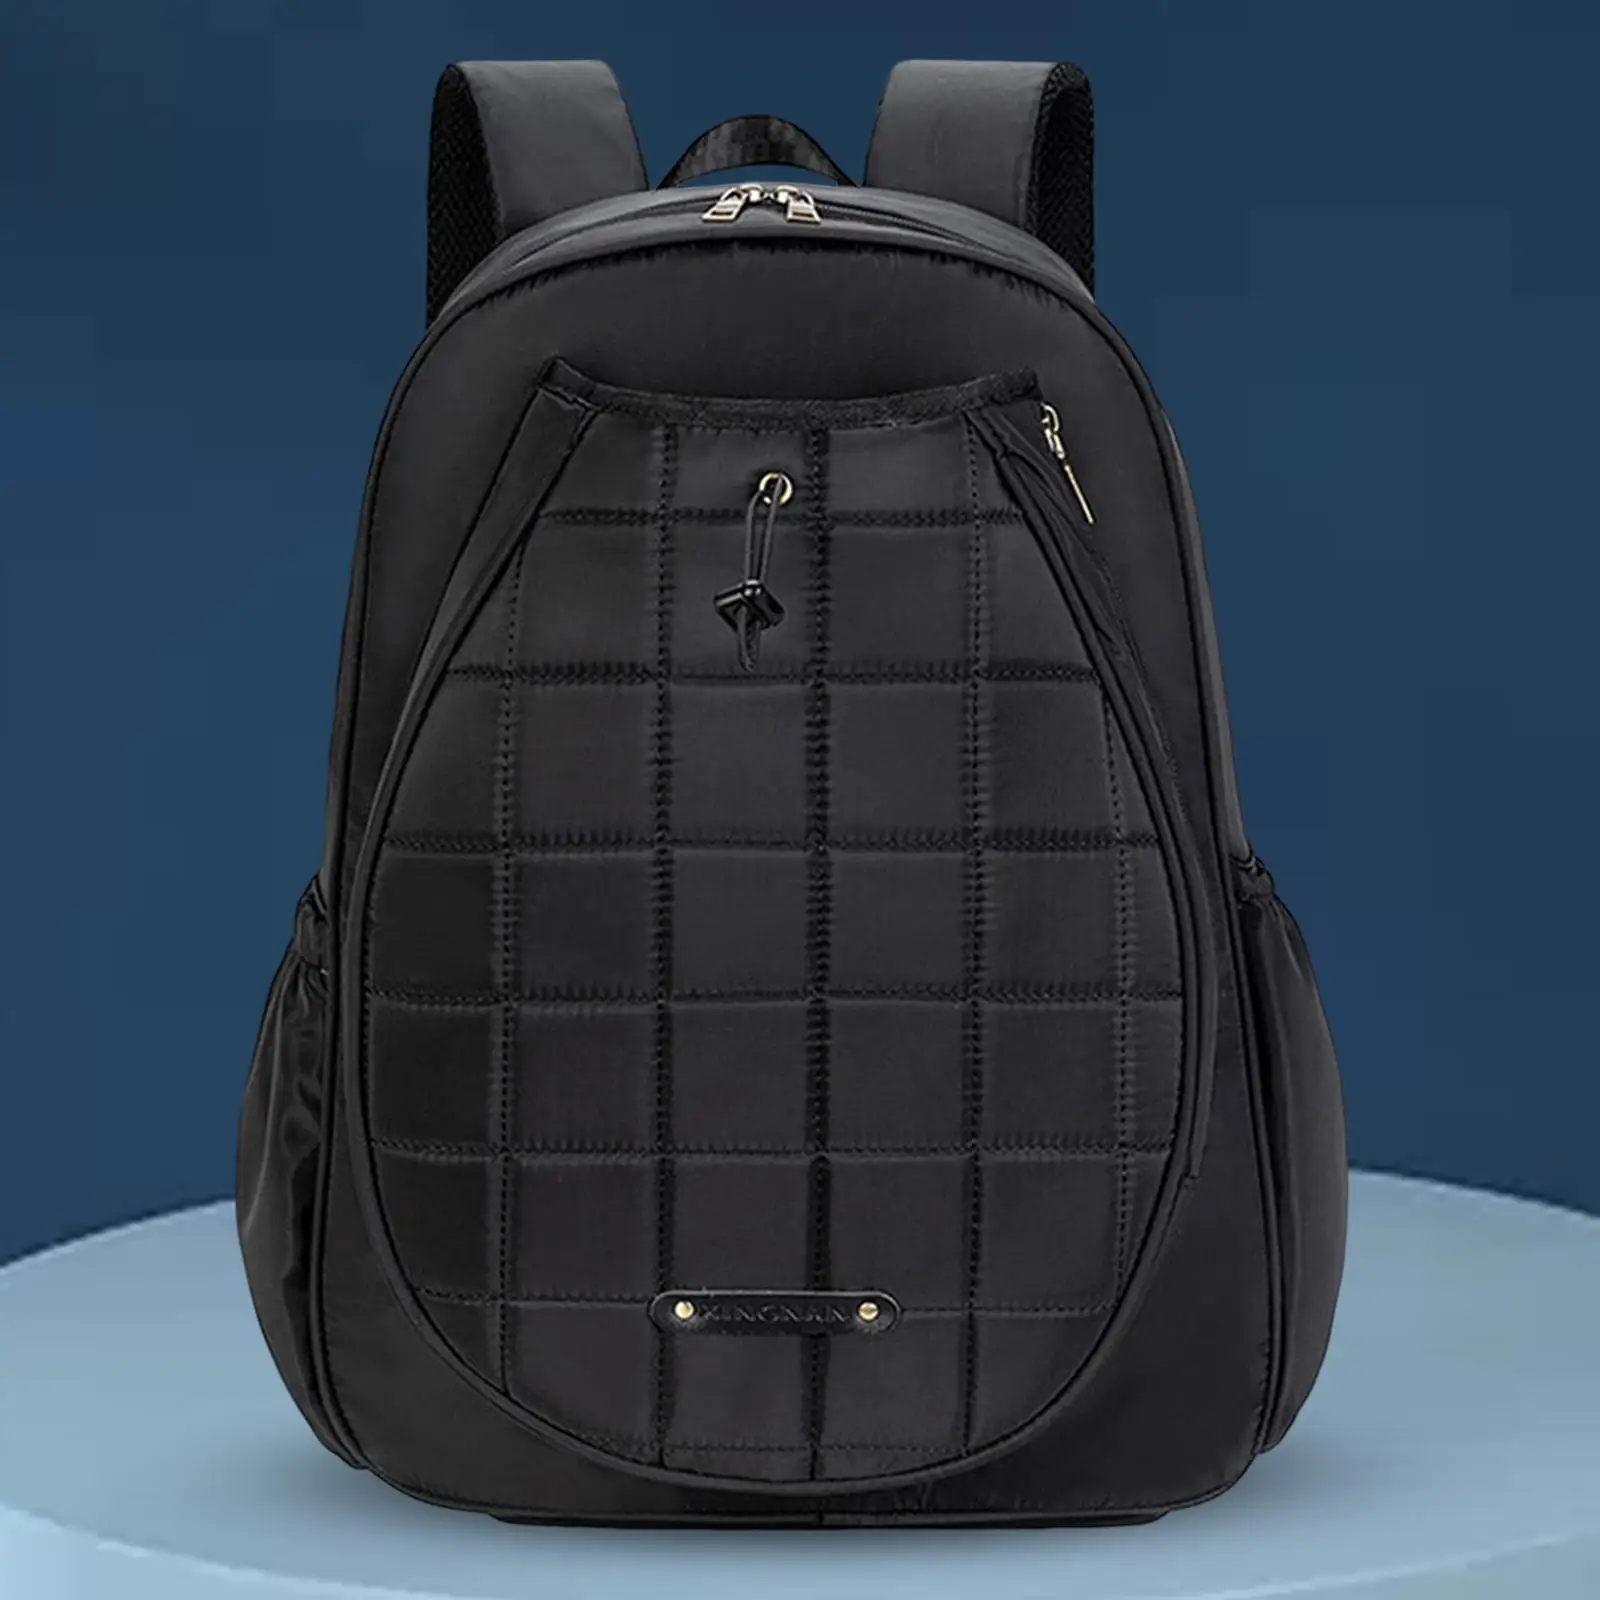 Tennis Backpack Tennis Bag Portable Large Racket Bag for Balls Accessories